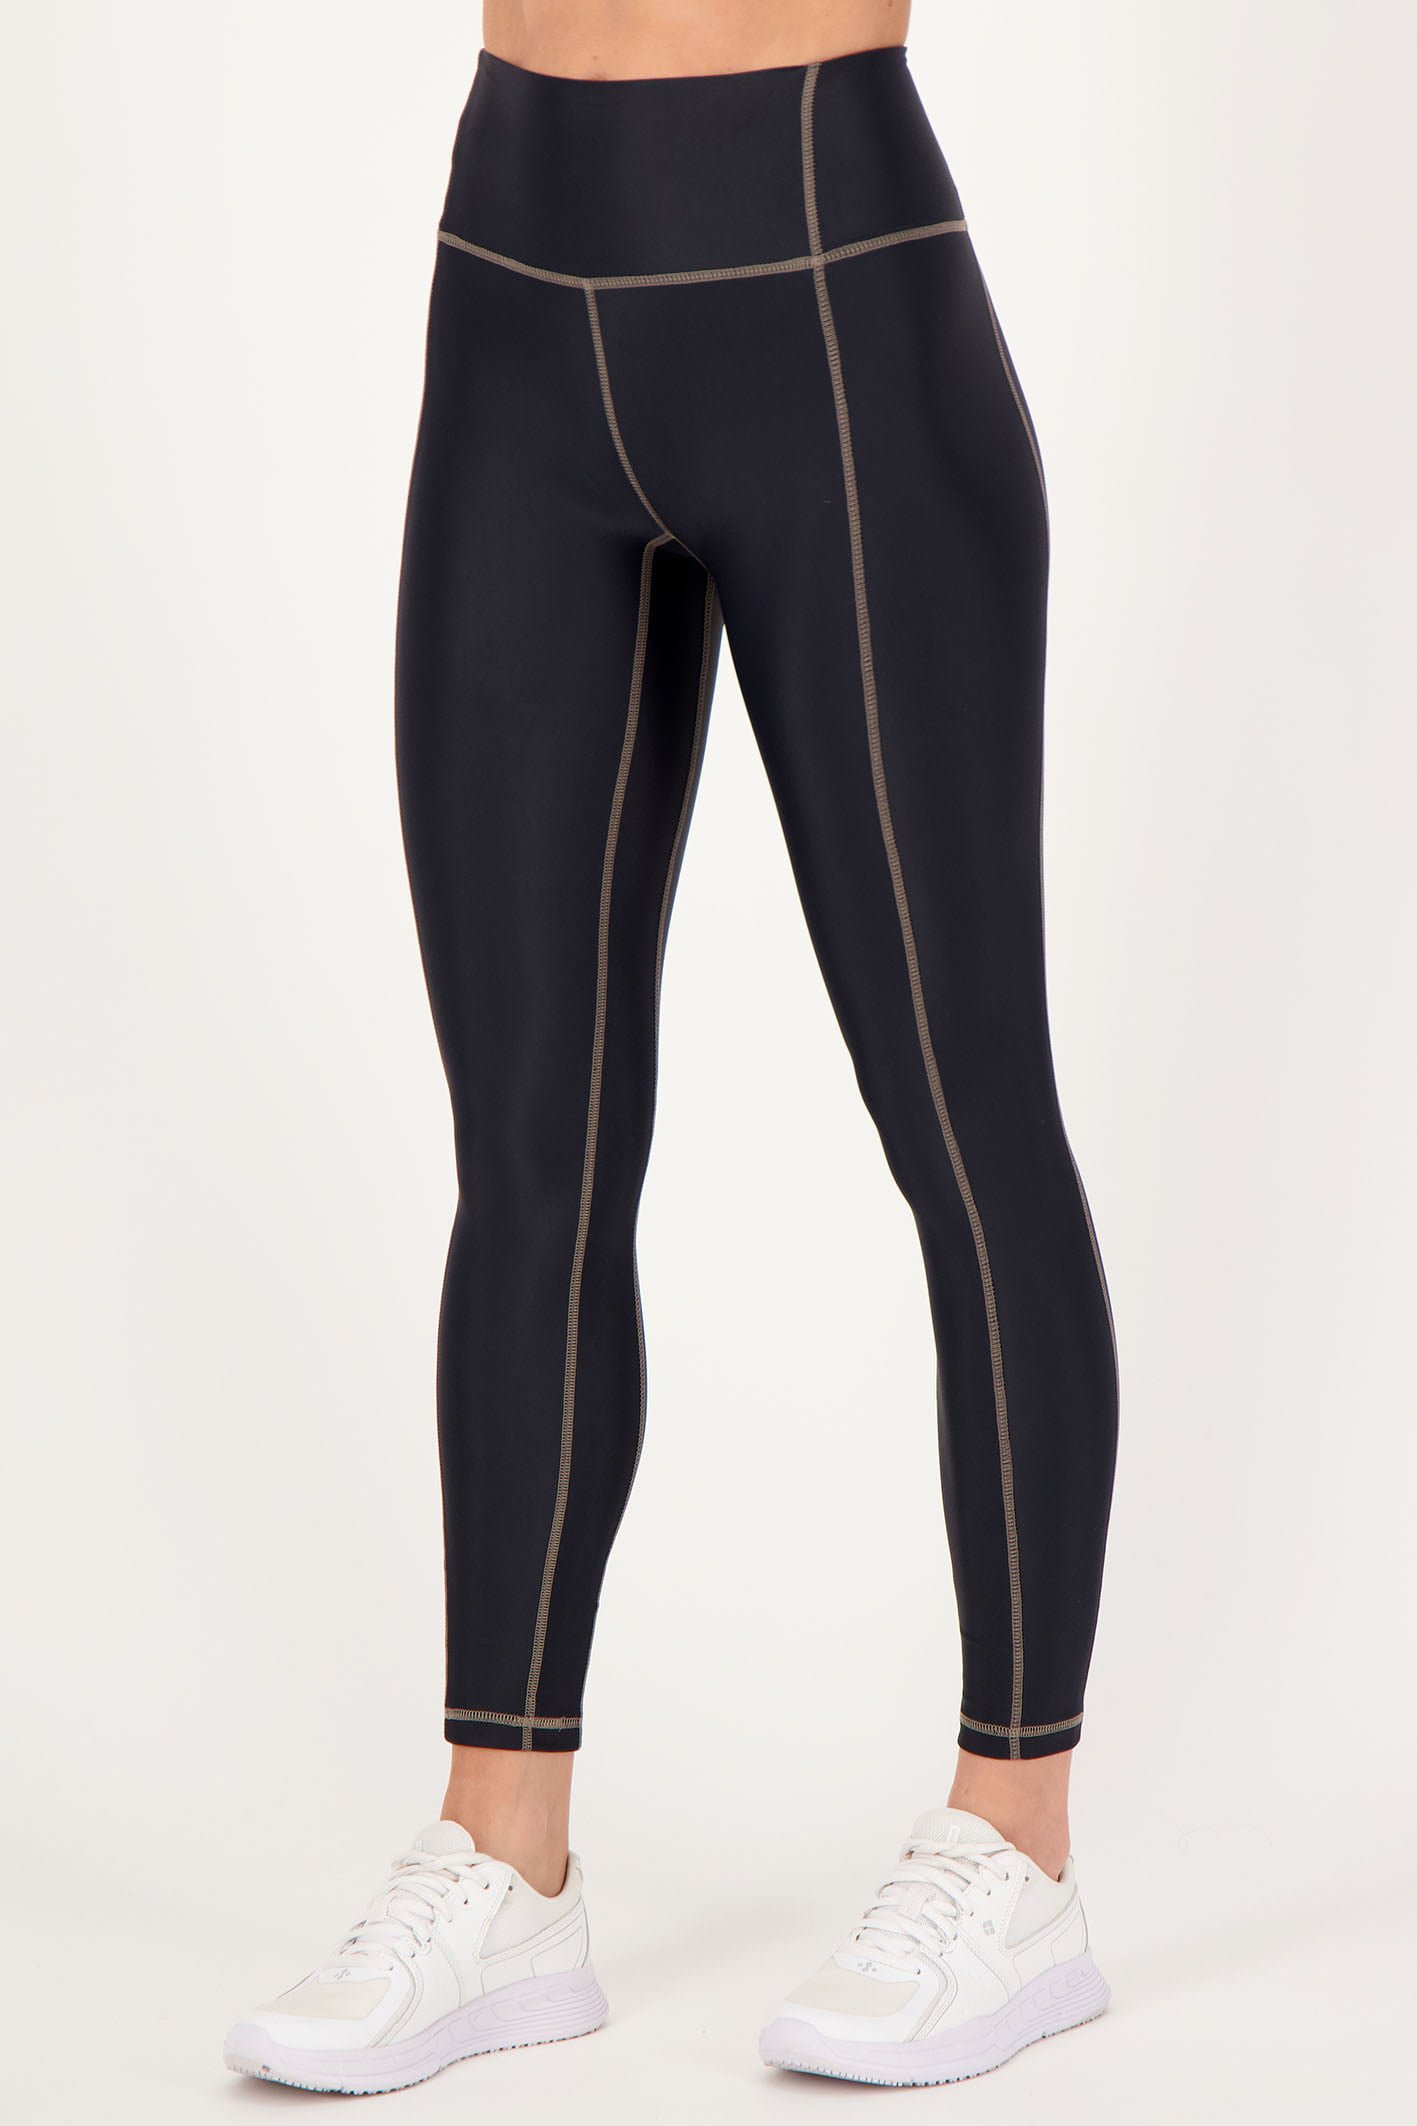 Leggings - FITTwear.co.uk  Squatproof and high waist women's